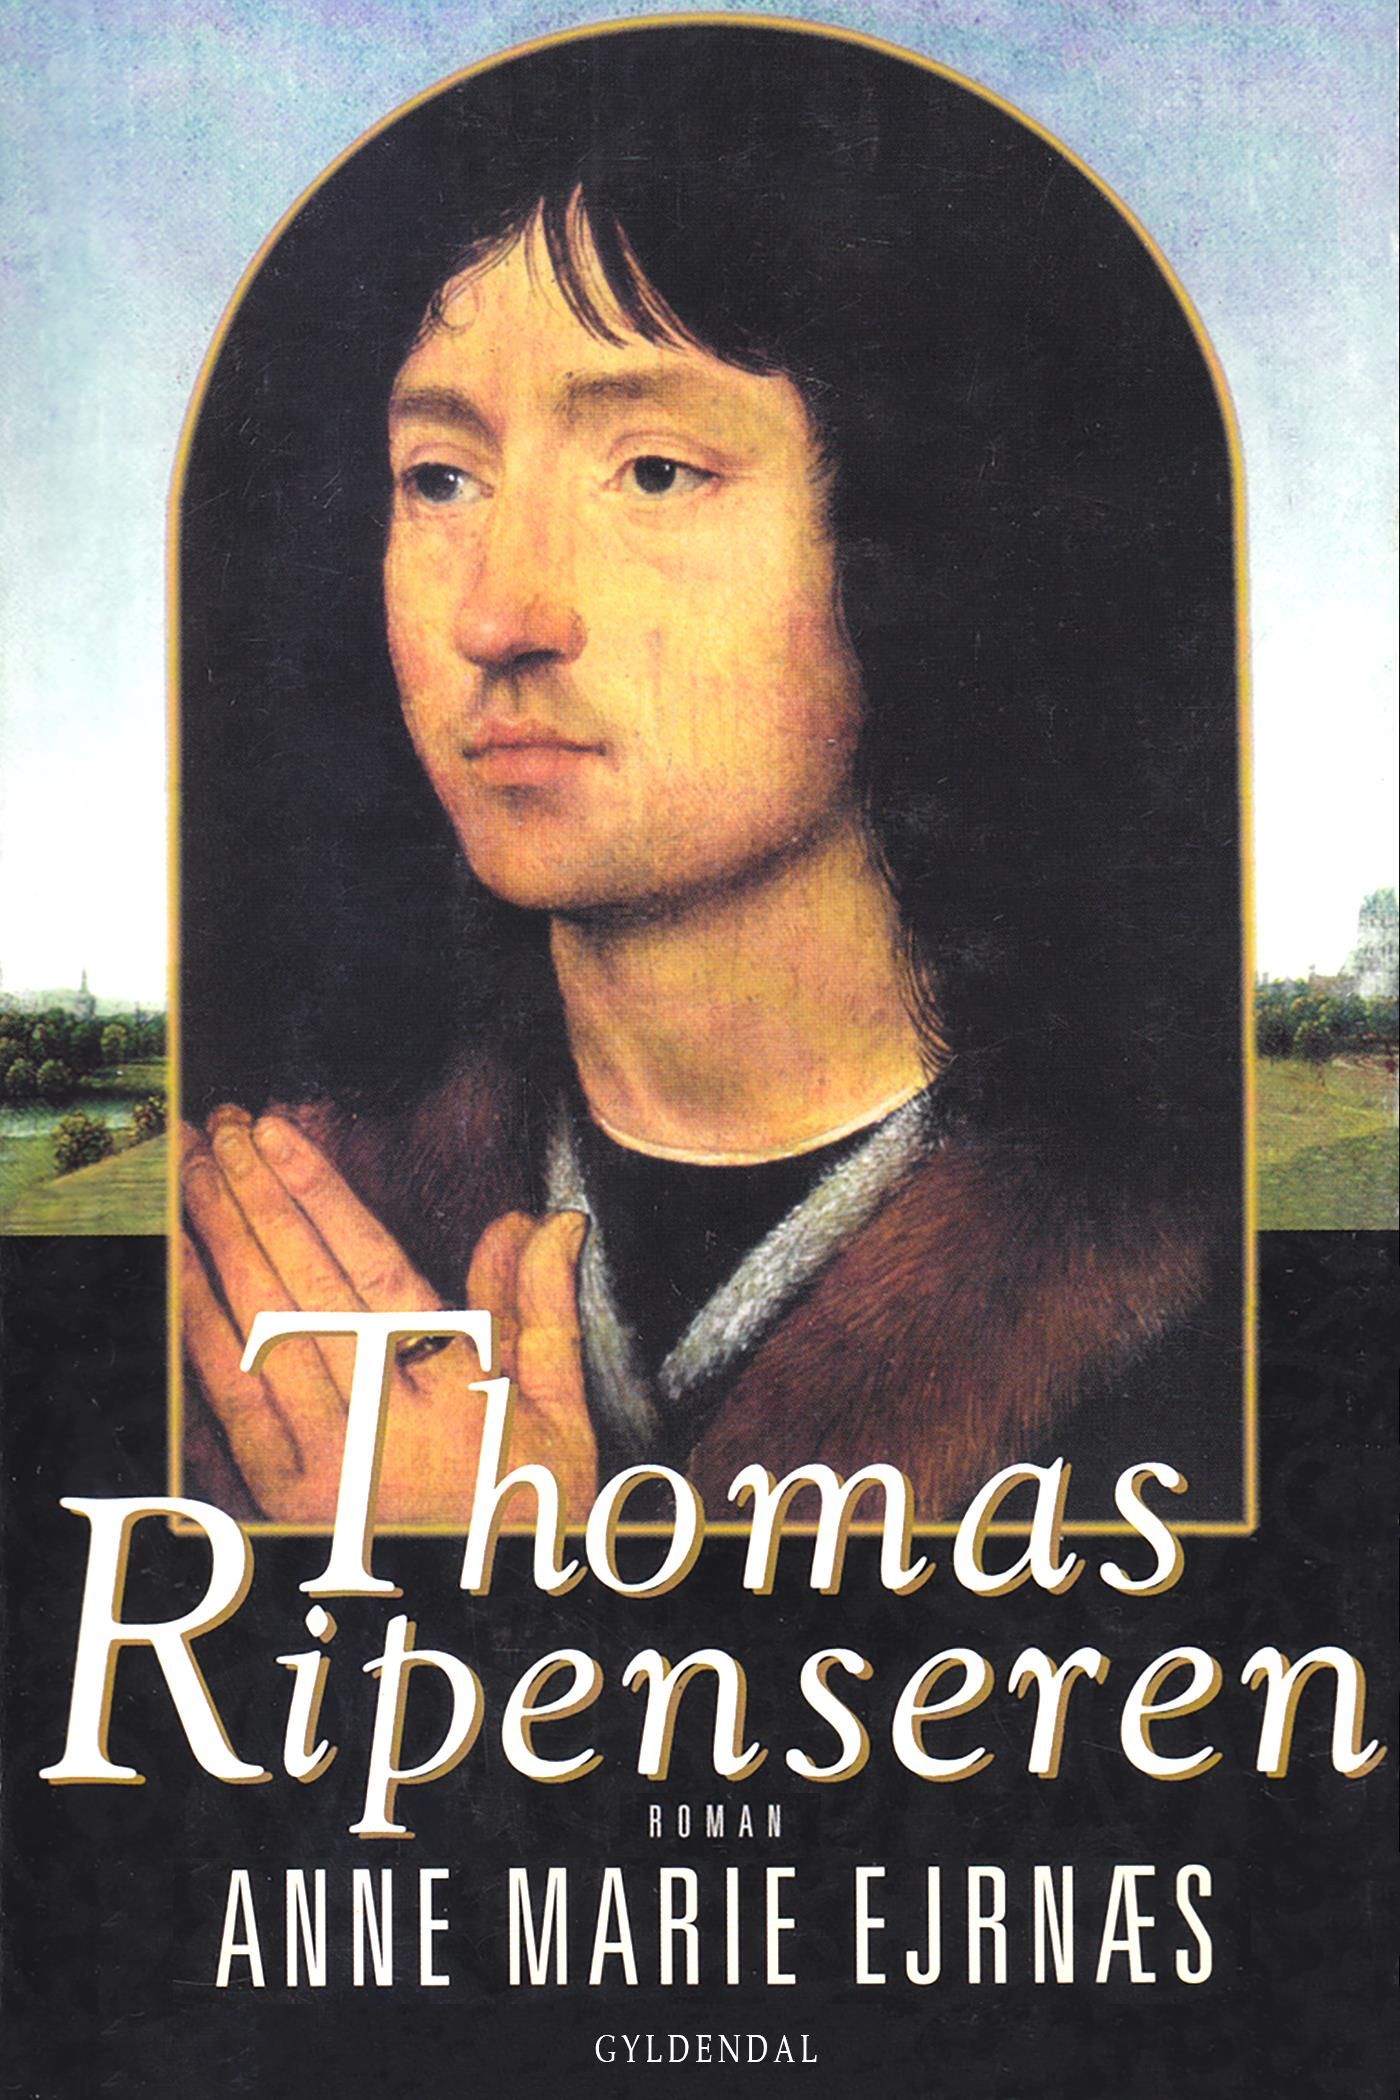 Thomas Ripenseren, eBook by Anne Marie Ejrnæs